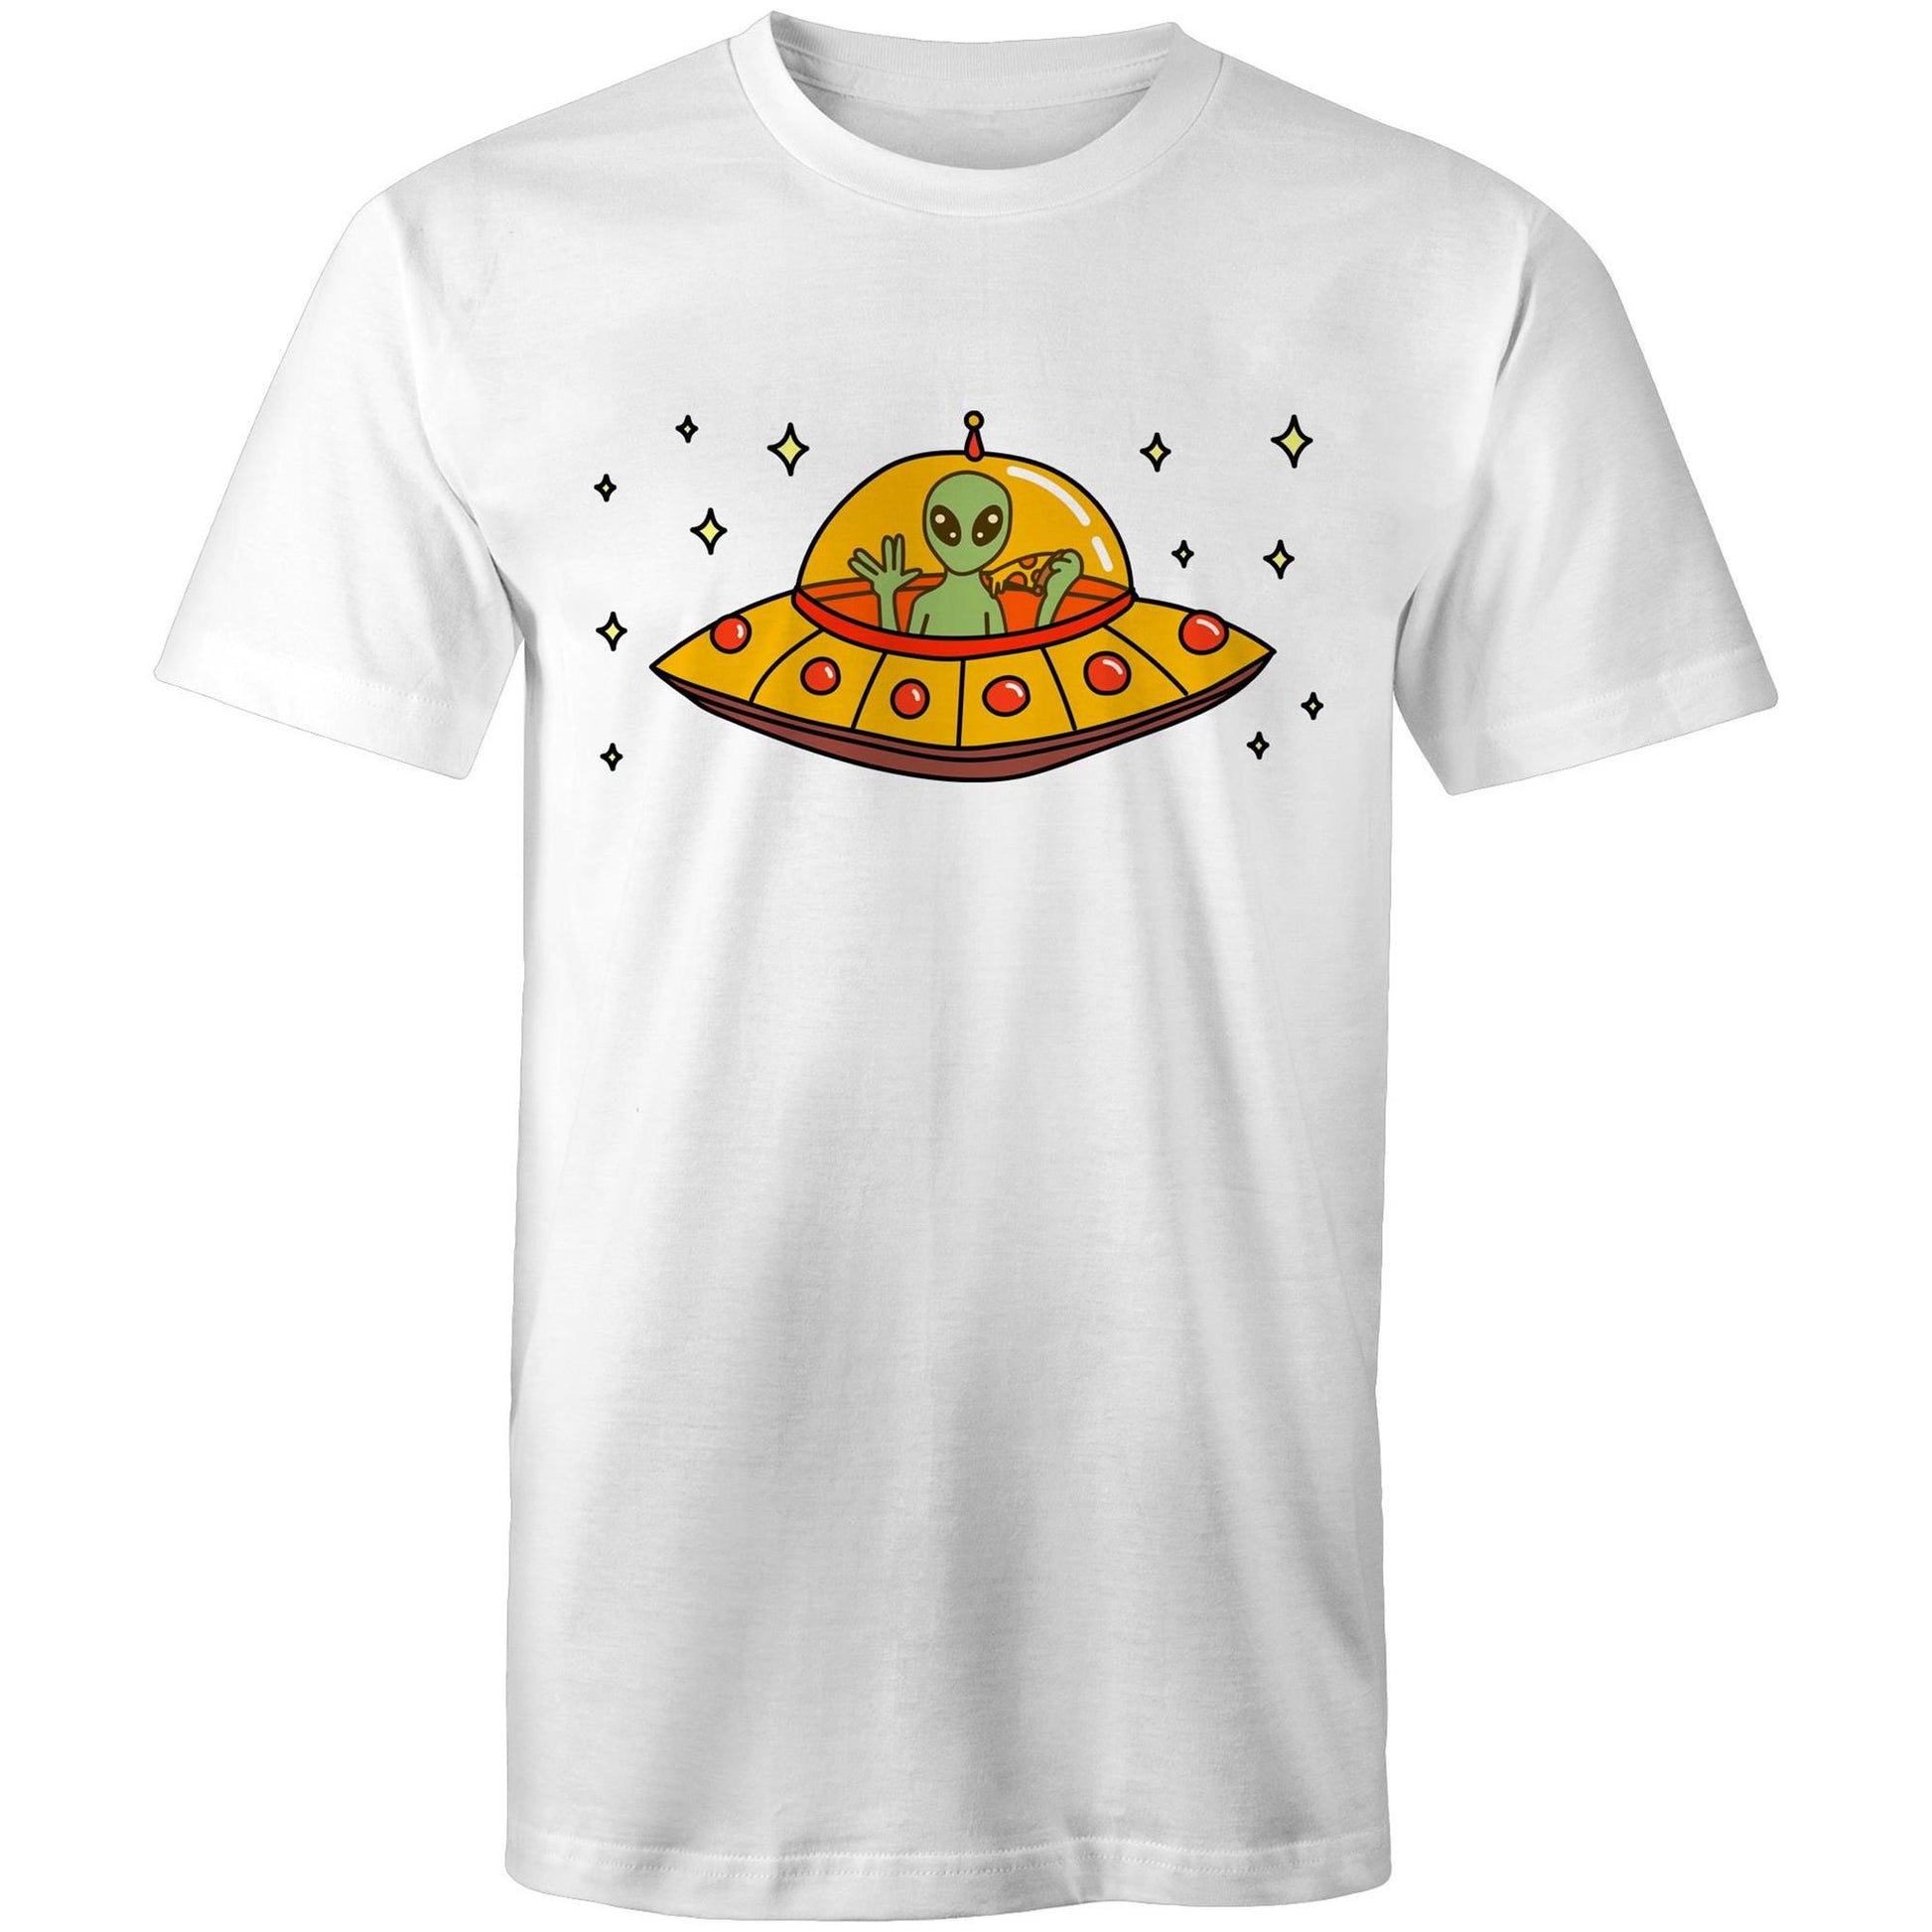 Alien Pizza - Mens T-Shirt White Mens T-shirt Sci Fi